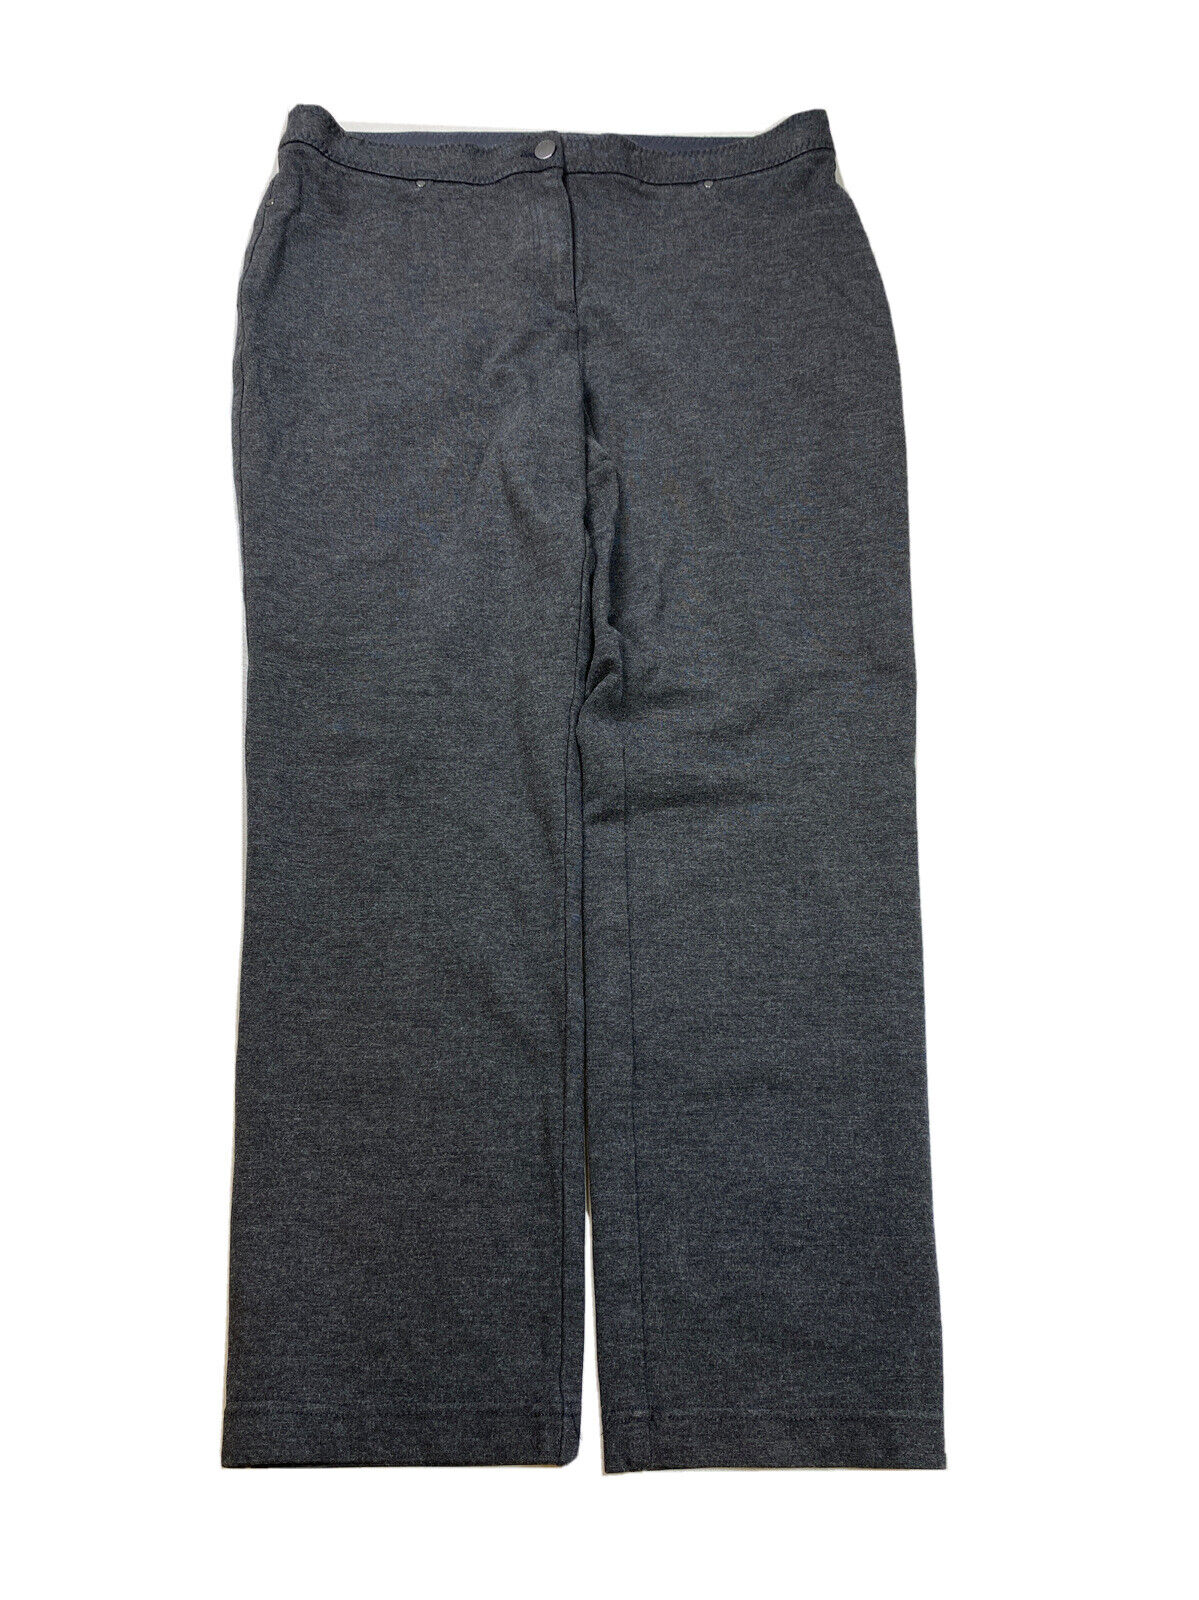 Chico's Women's Gray Ponte Faux Pocket Stretch Slim Pants - 1.5/10 Short